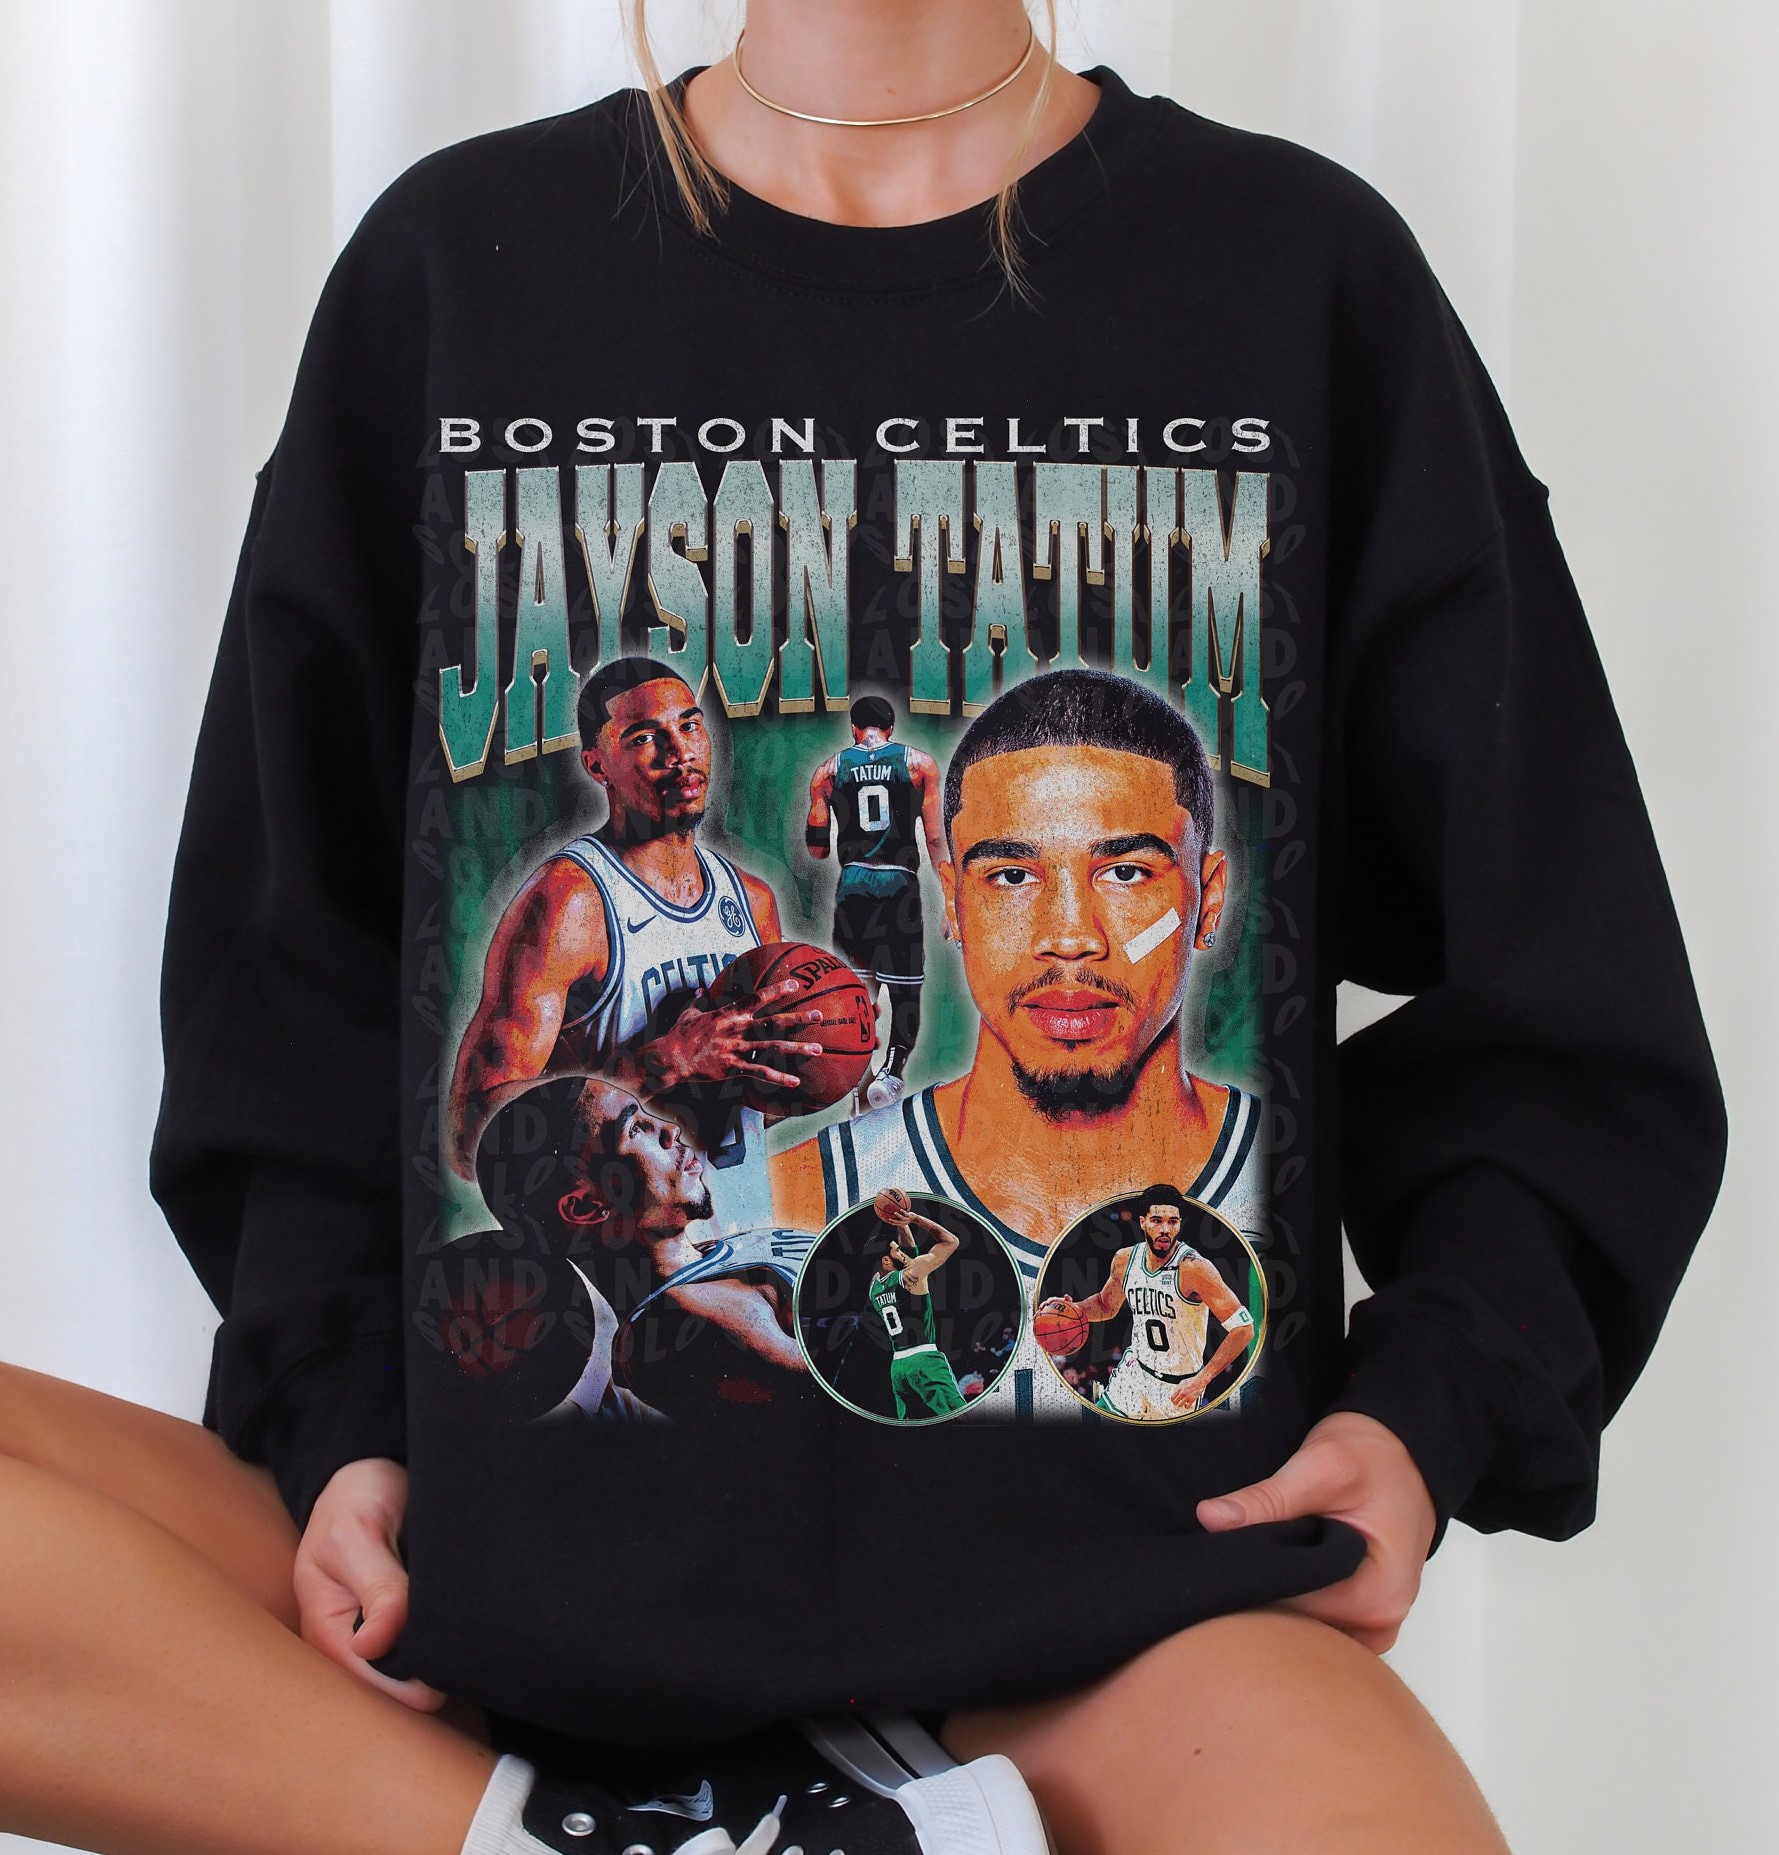 Jayson Tatum Shirt Jayson Tatum Bootleg Sweatshirt 90s Vintage Graphic Tee  Boston Basketball Shirt 90s Retro Basketball MVP Play - AliExpress